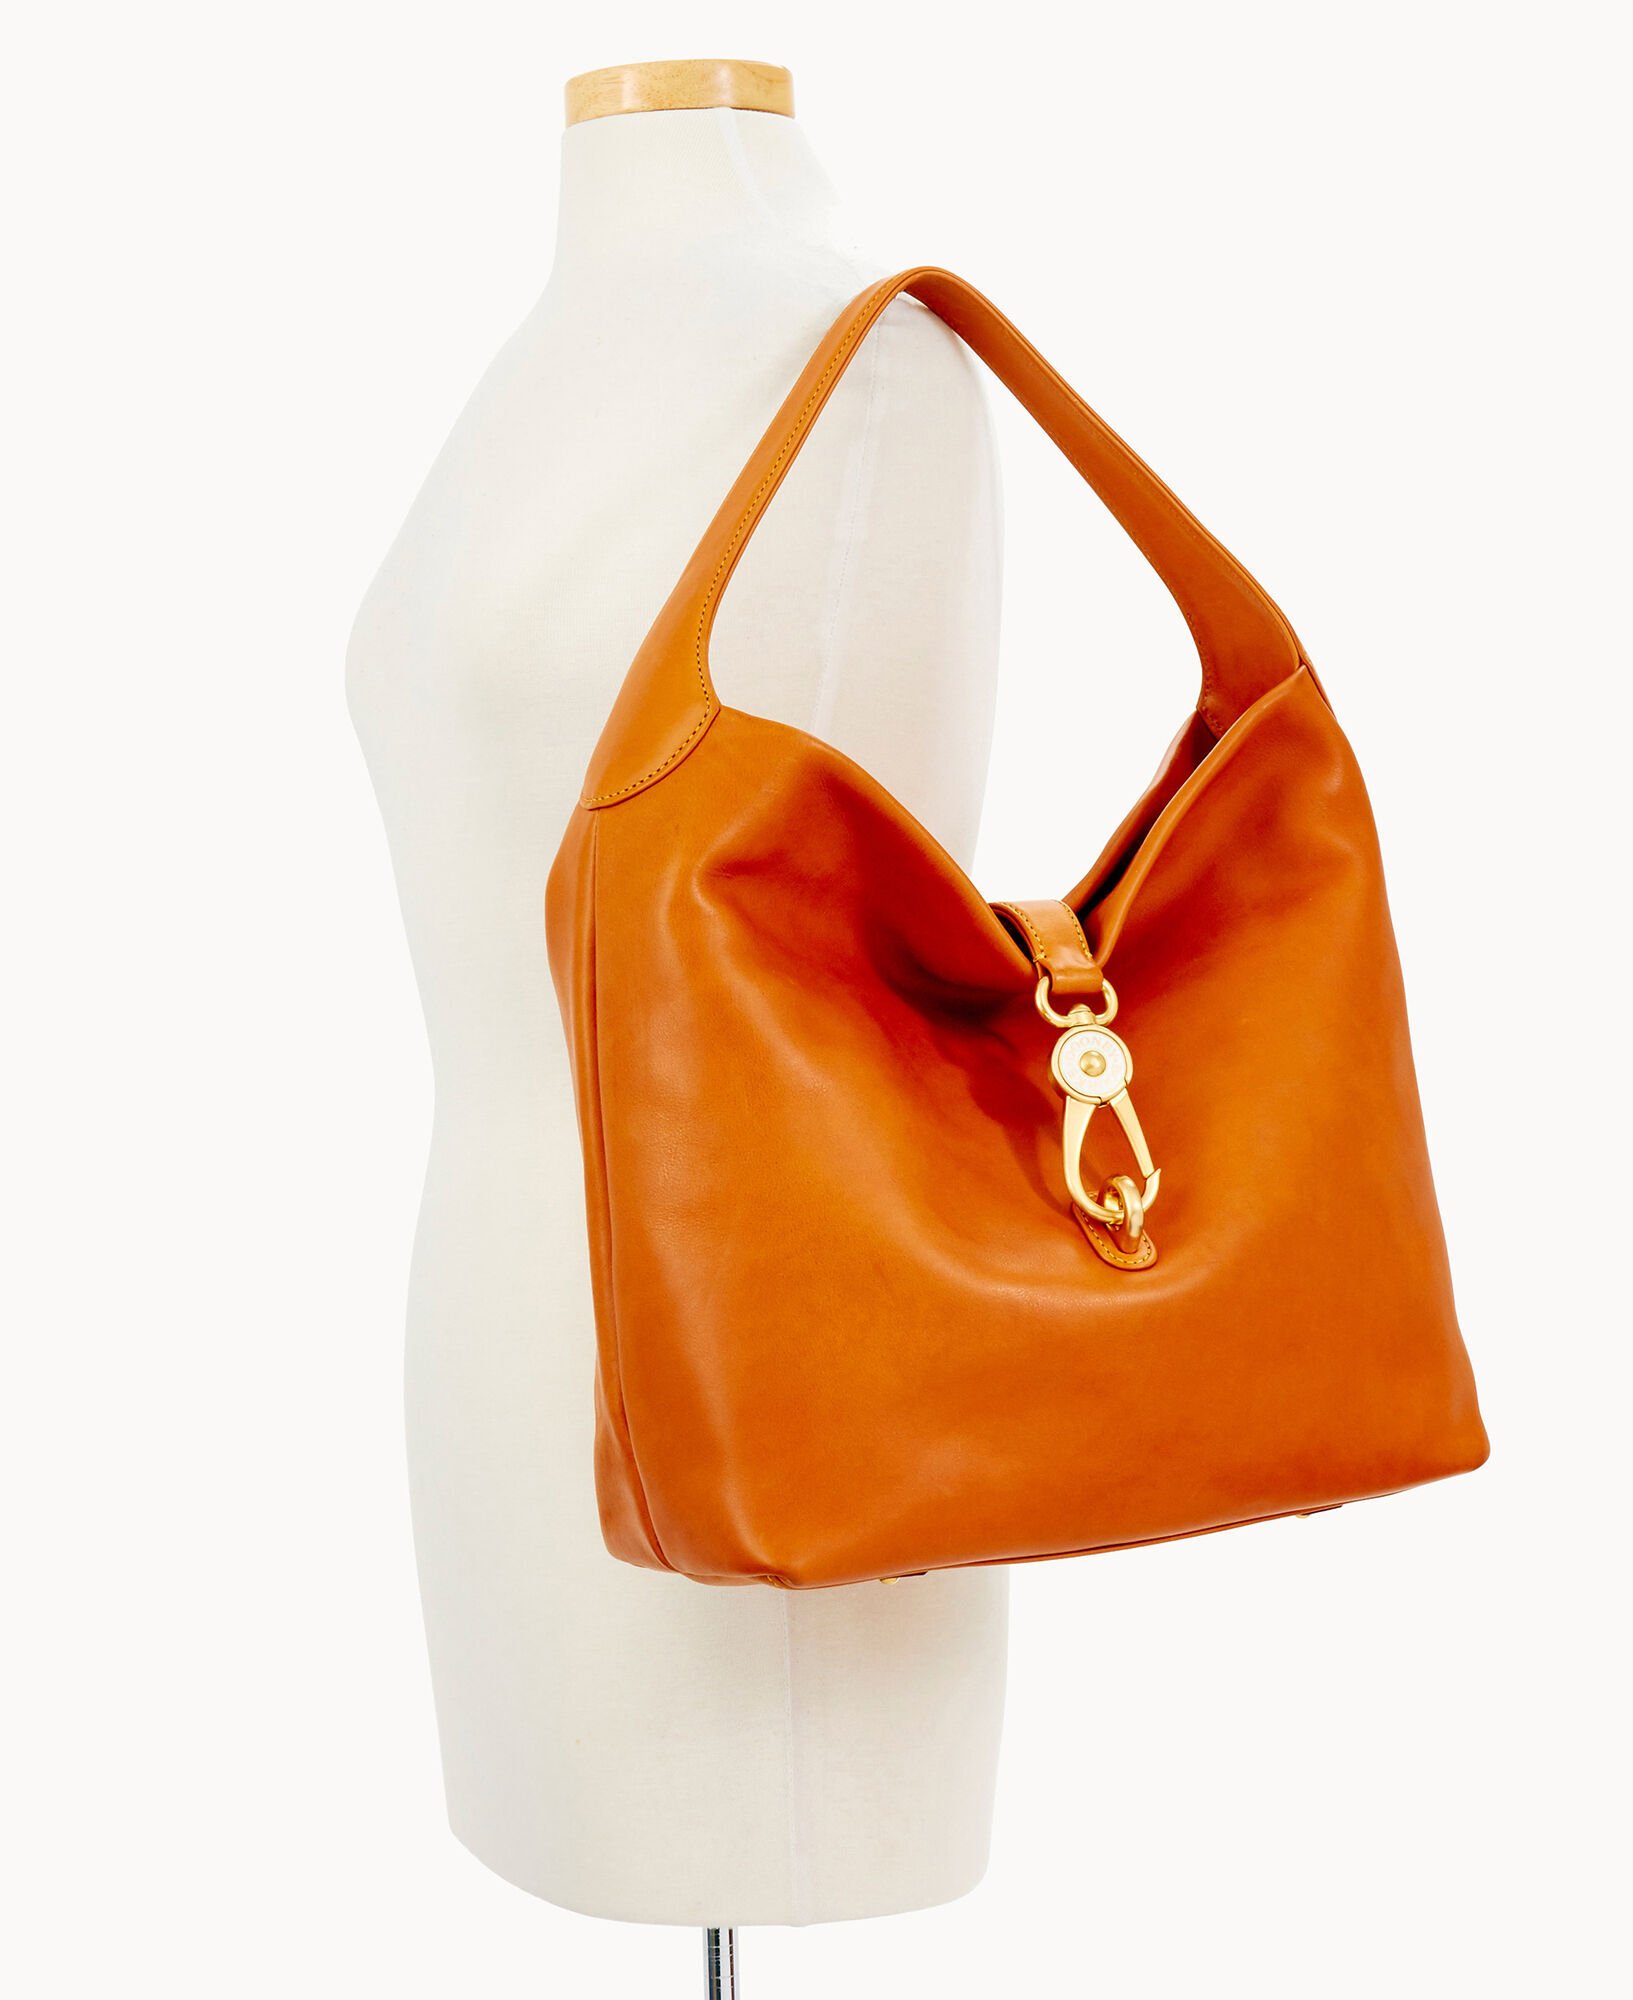 Dooney & Bourke Florentine Medium Sac Shoulder Bag